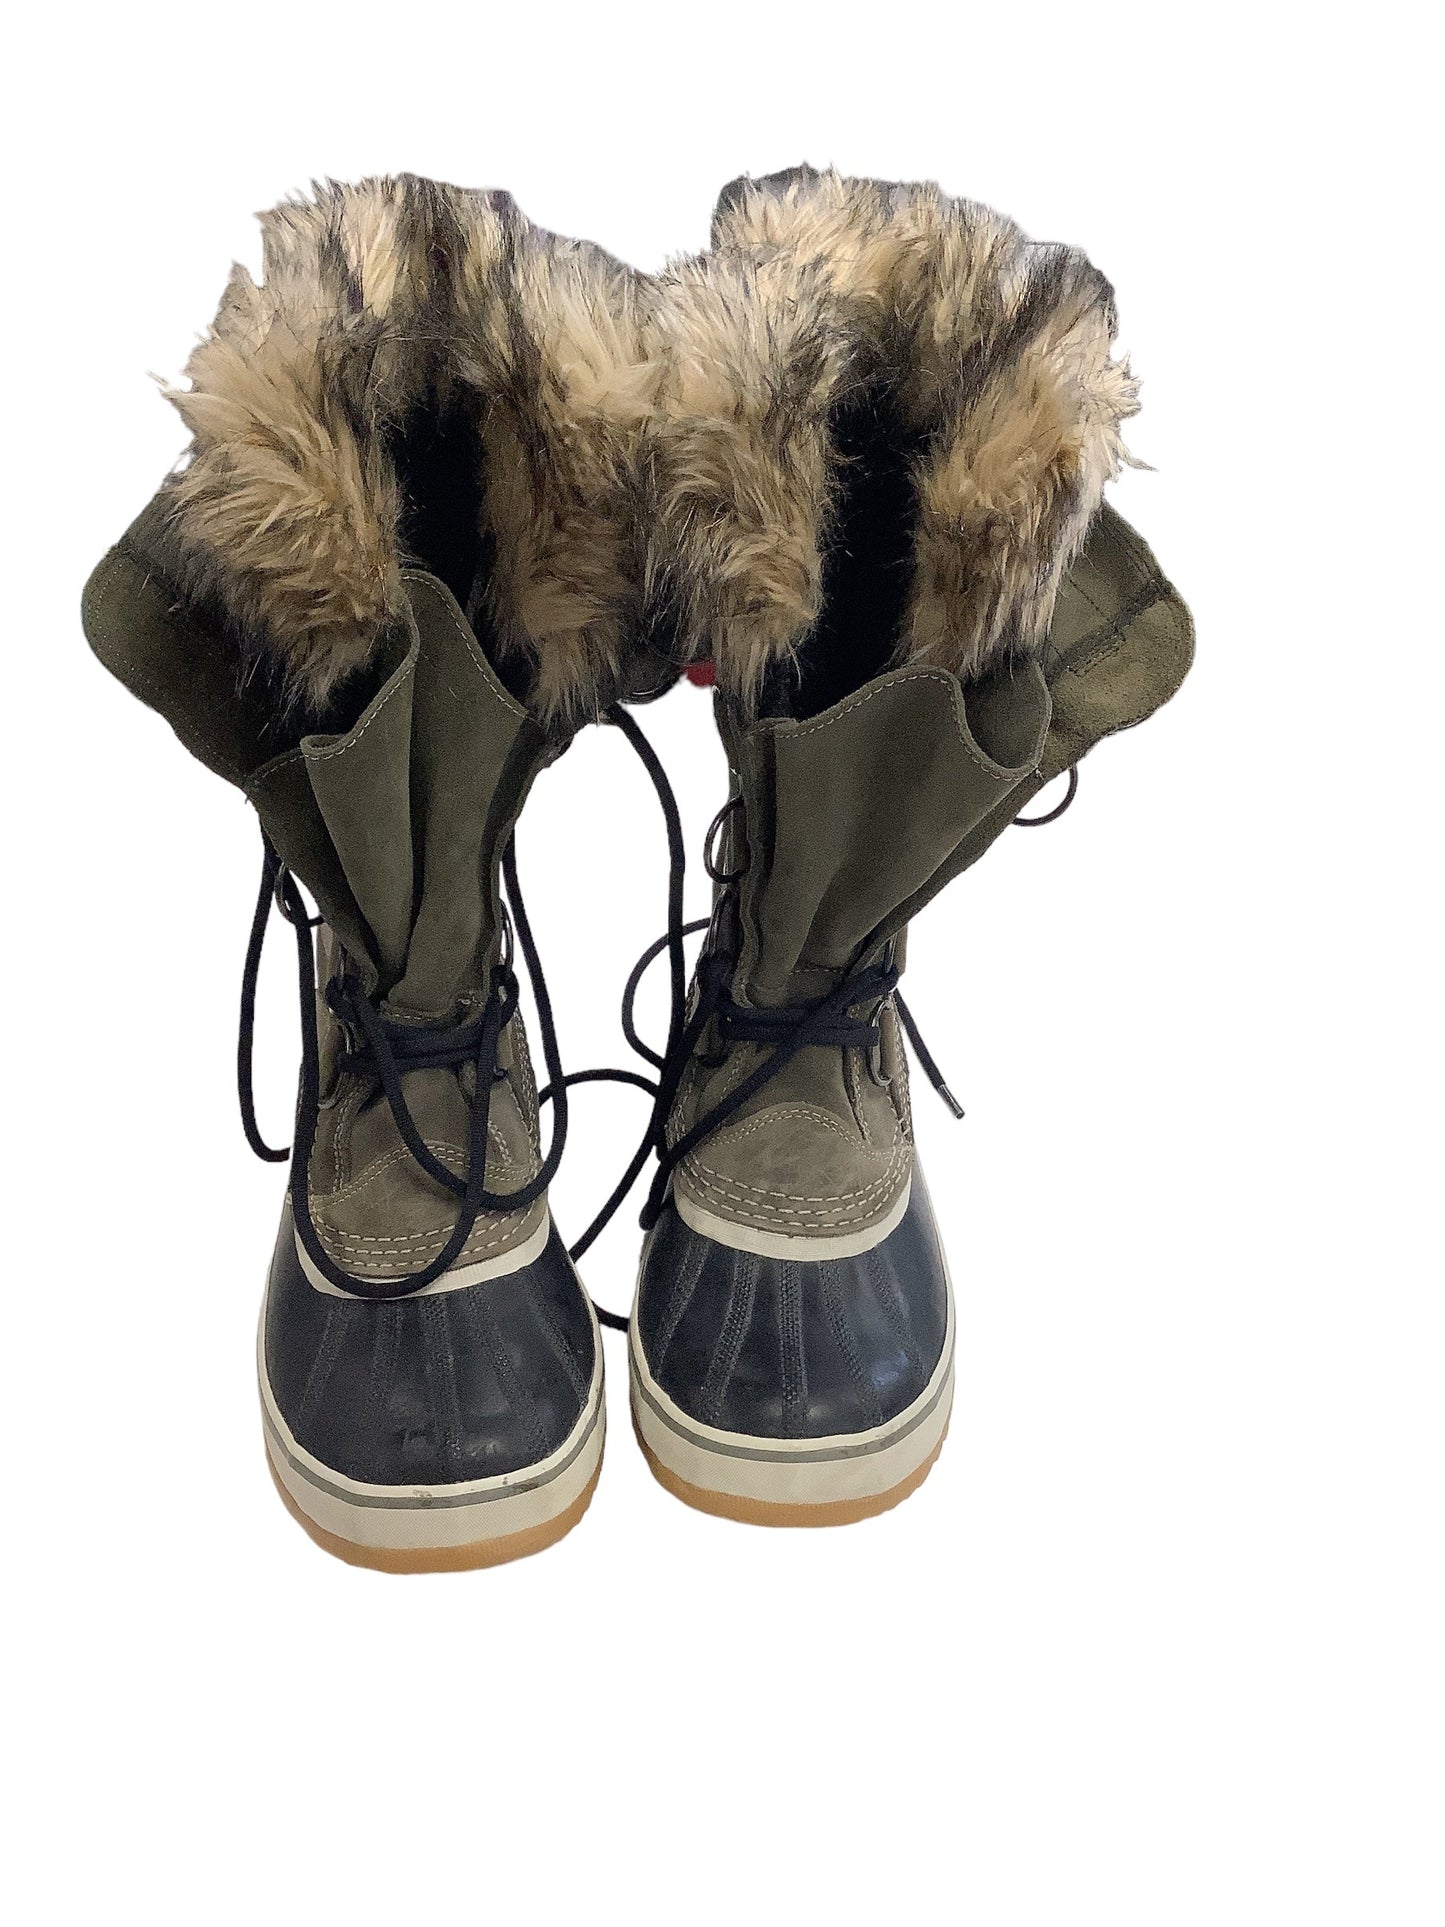 Green Boots Snow Sorel, Size 9